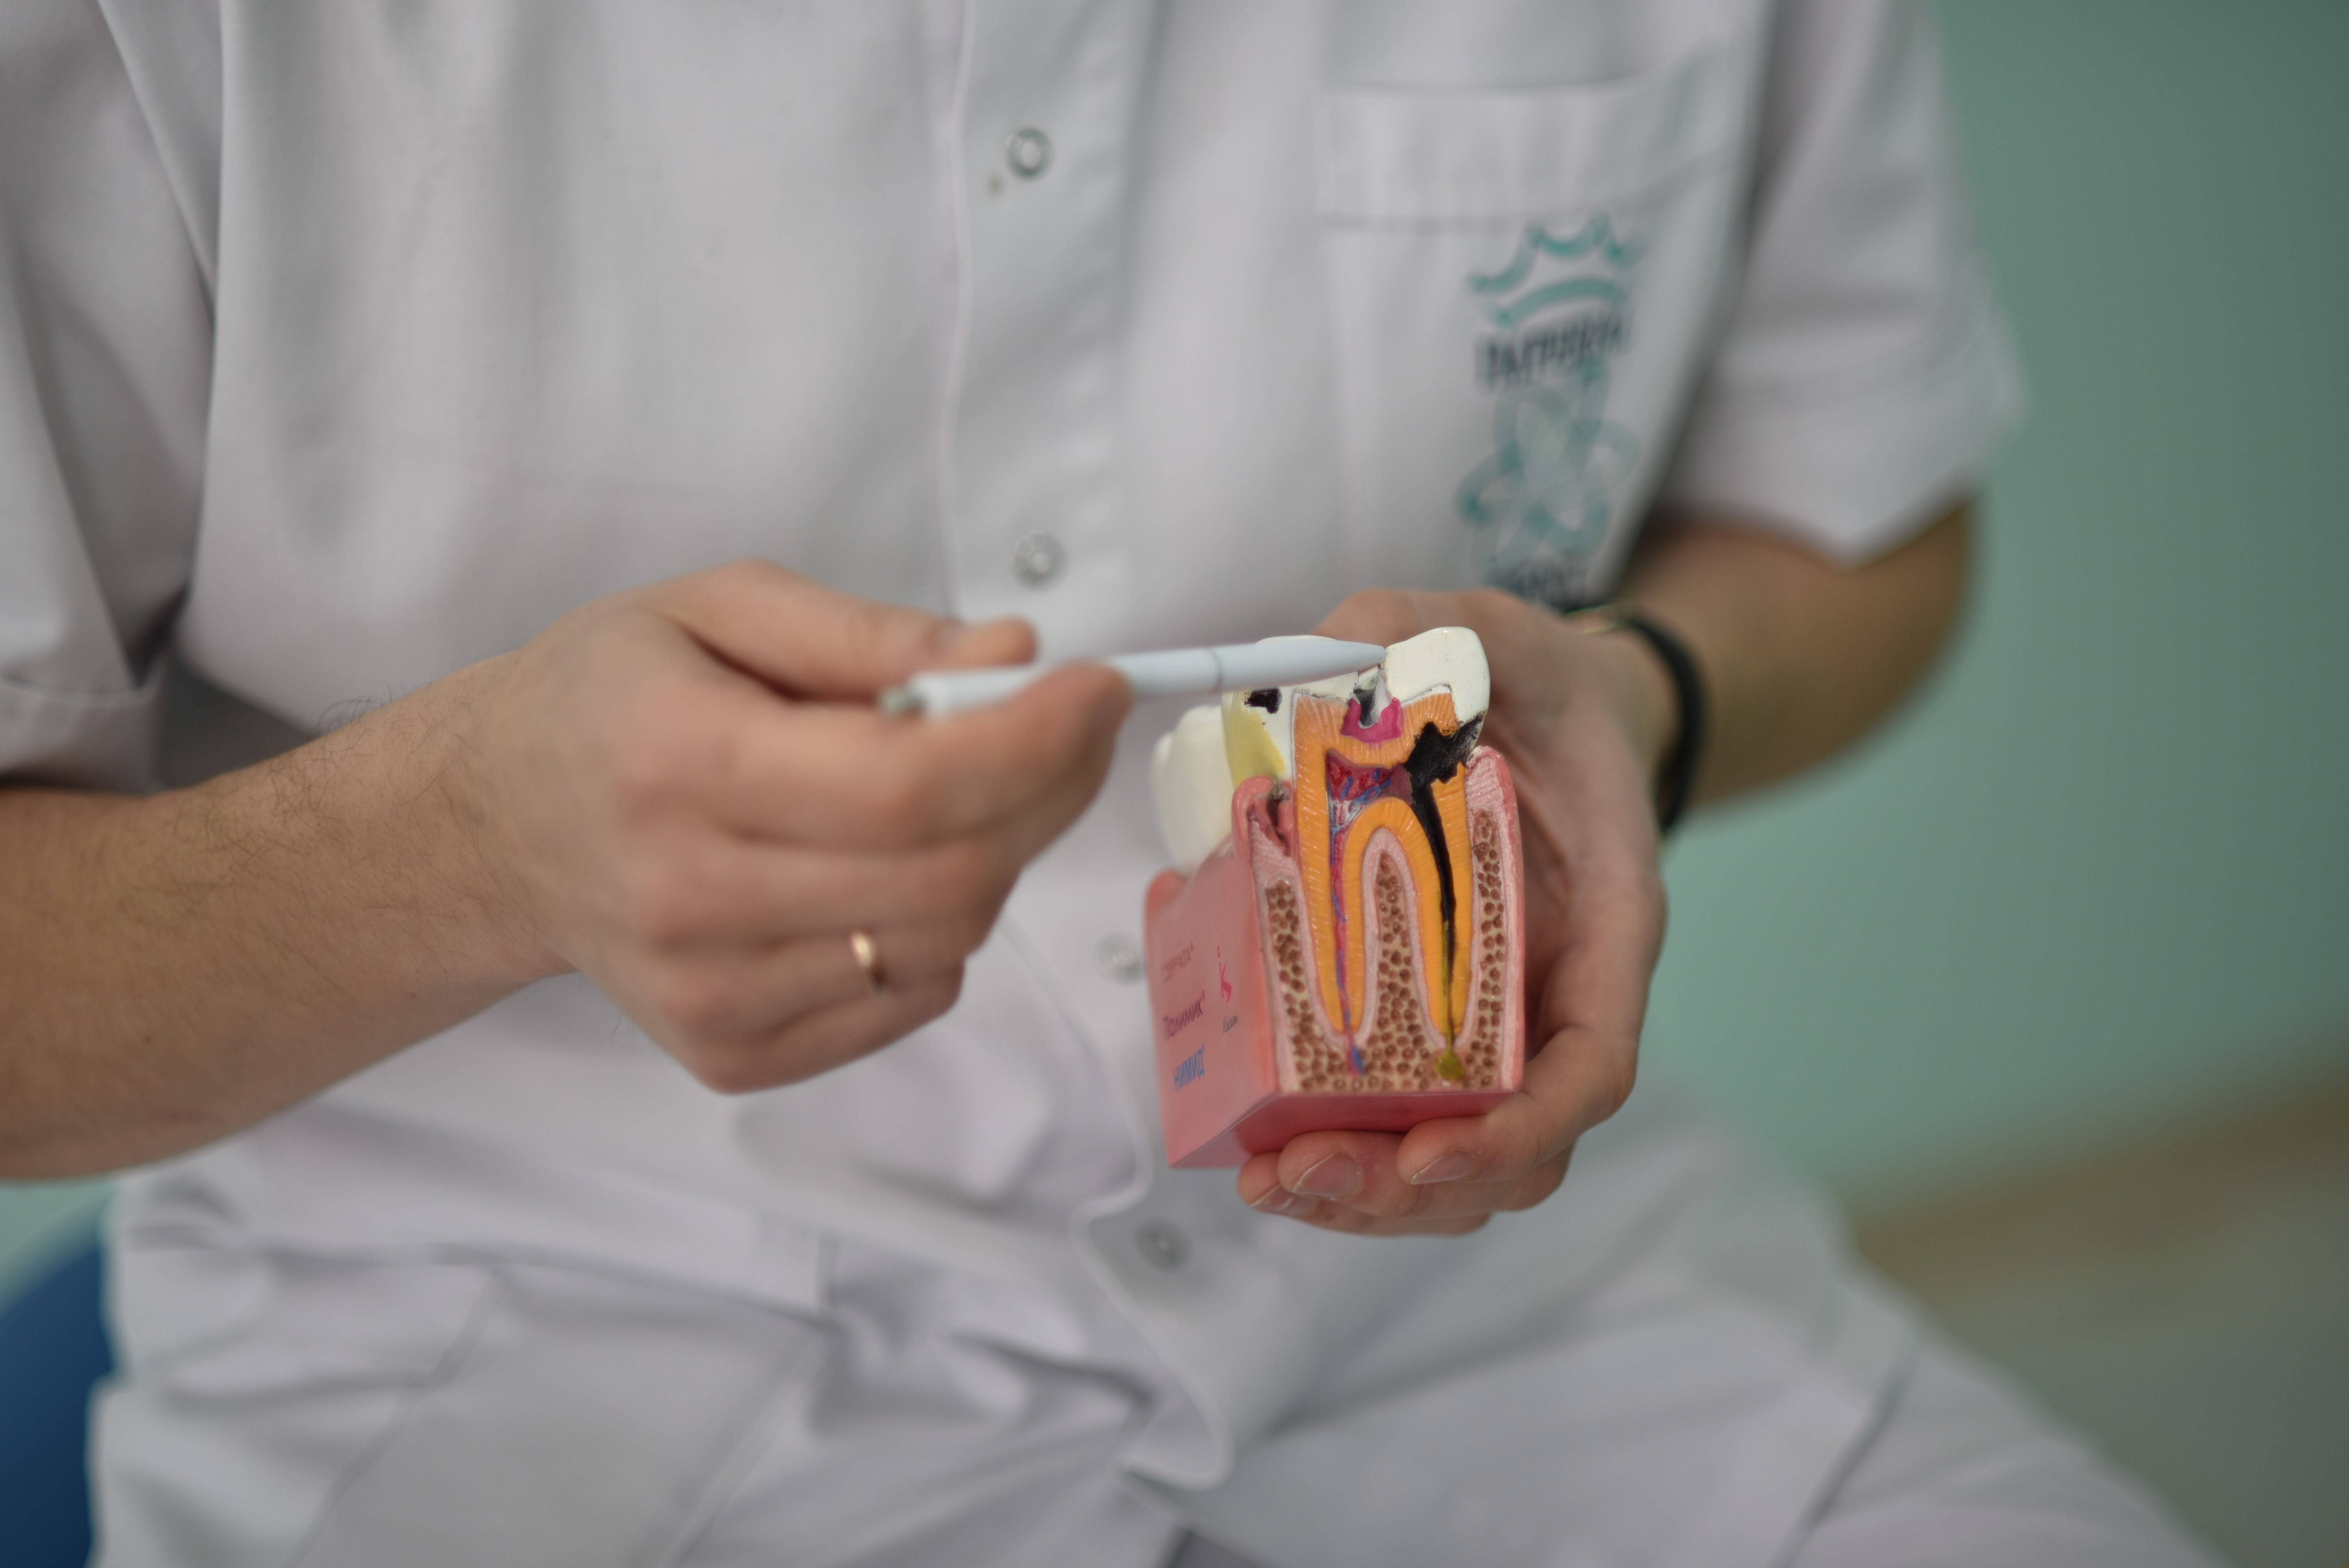 tratament carii chisinau stomatolog explica pe macheta tratament de canal